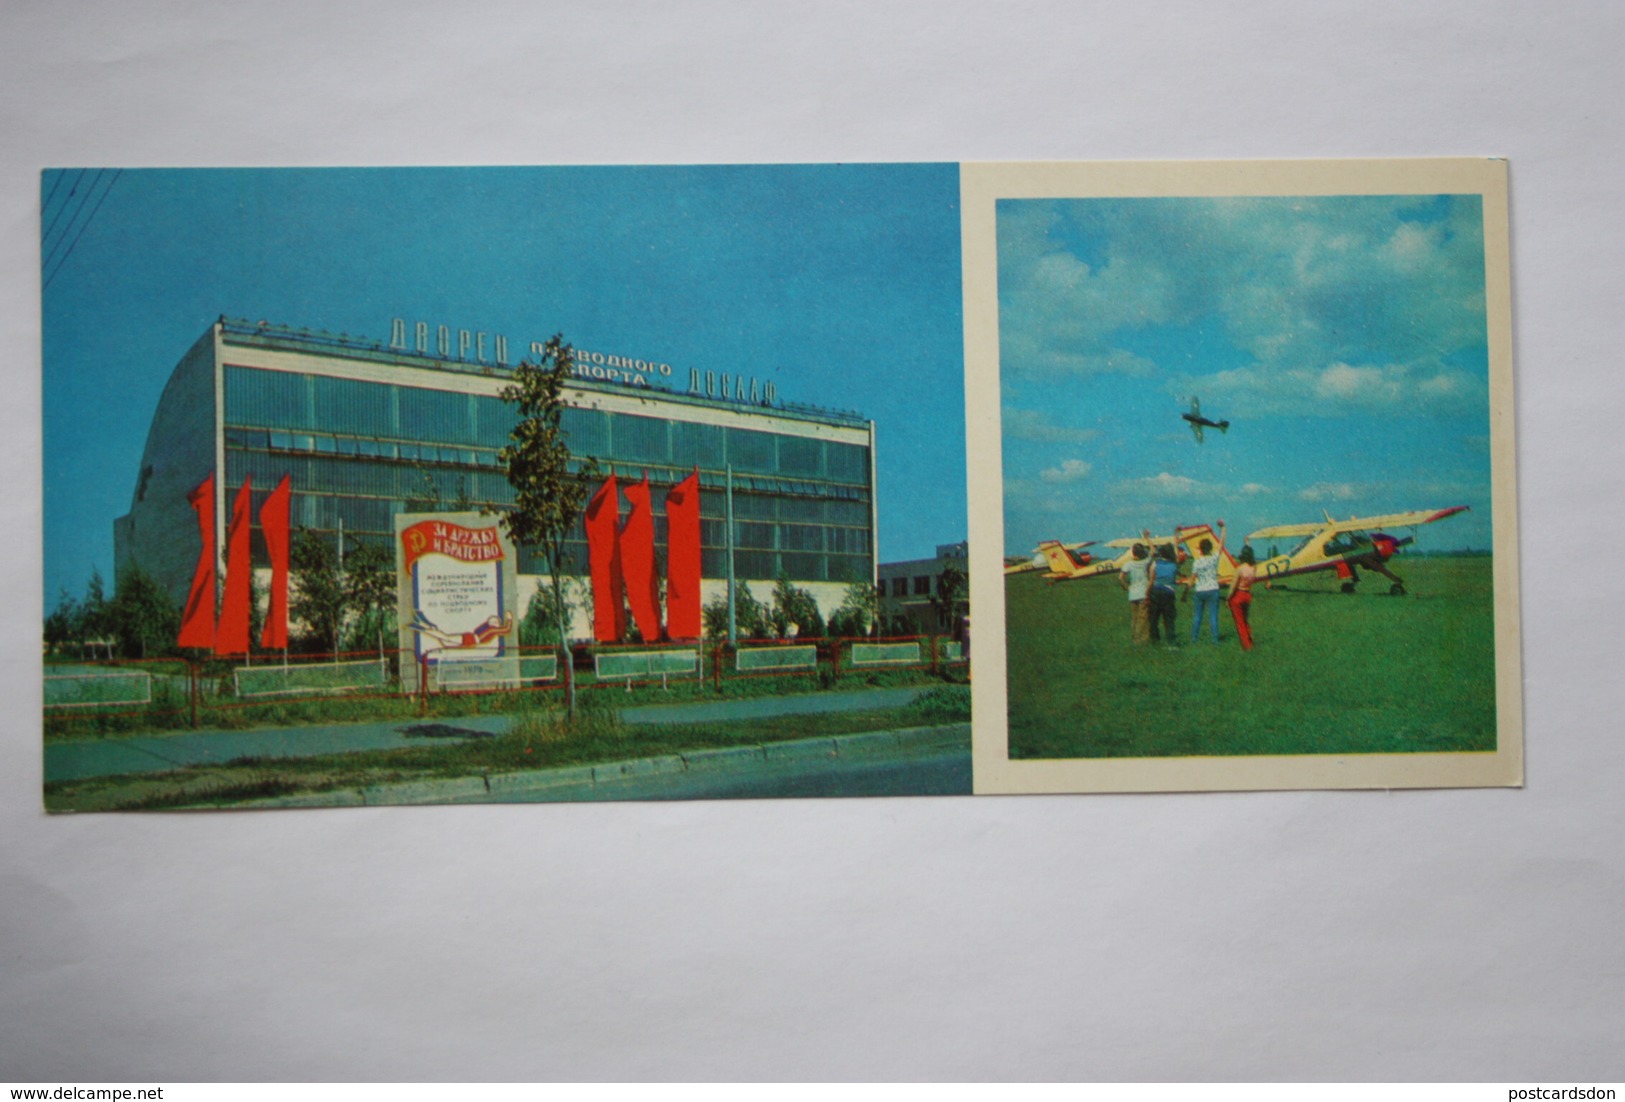 UKRAINE. KIEV. "CHAIKA" DTSAAF AIRPORT / Aerodrome - Plane / Avion. Long Format 1980 - Aerodrome